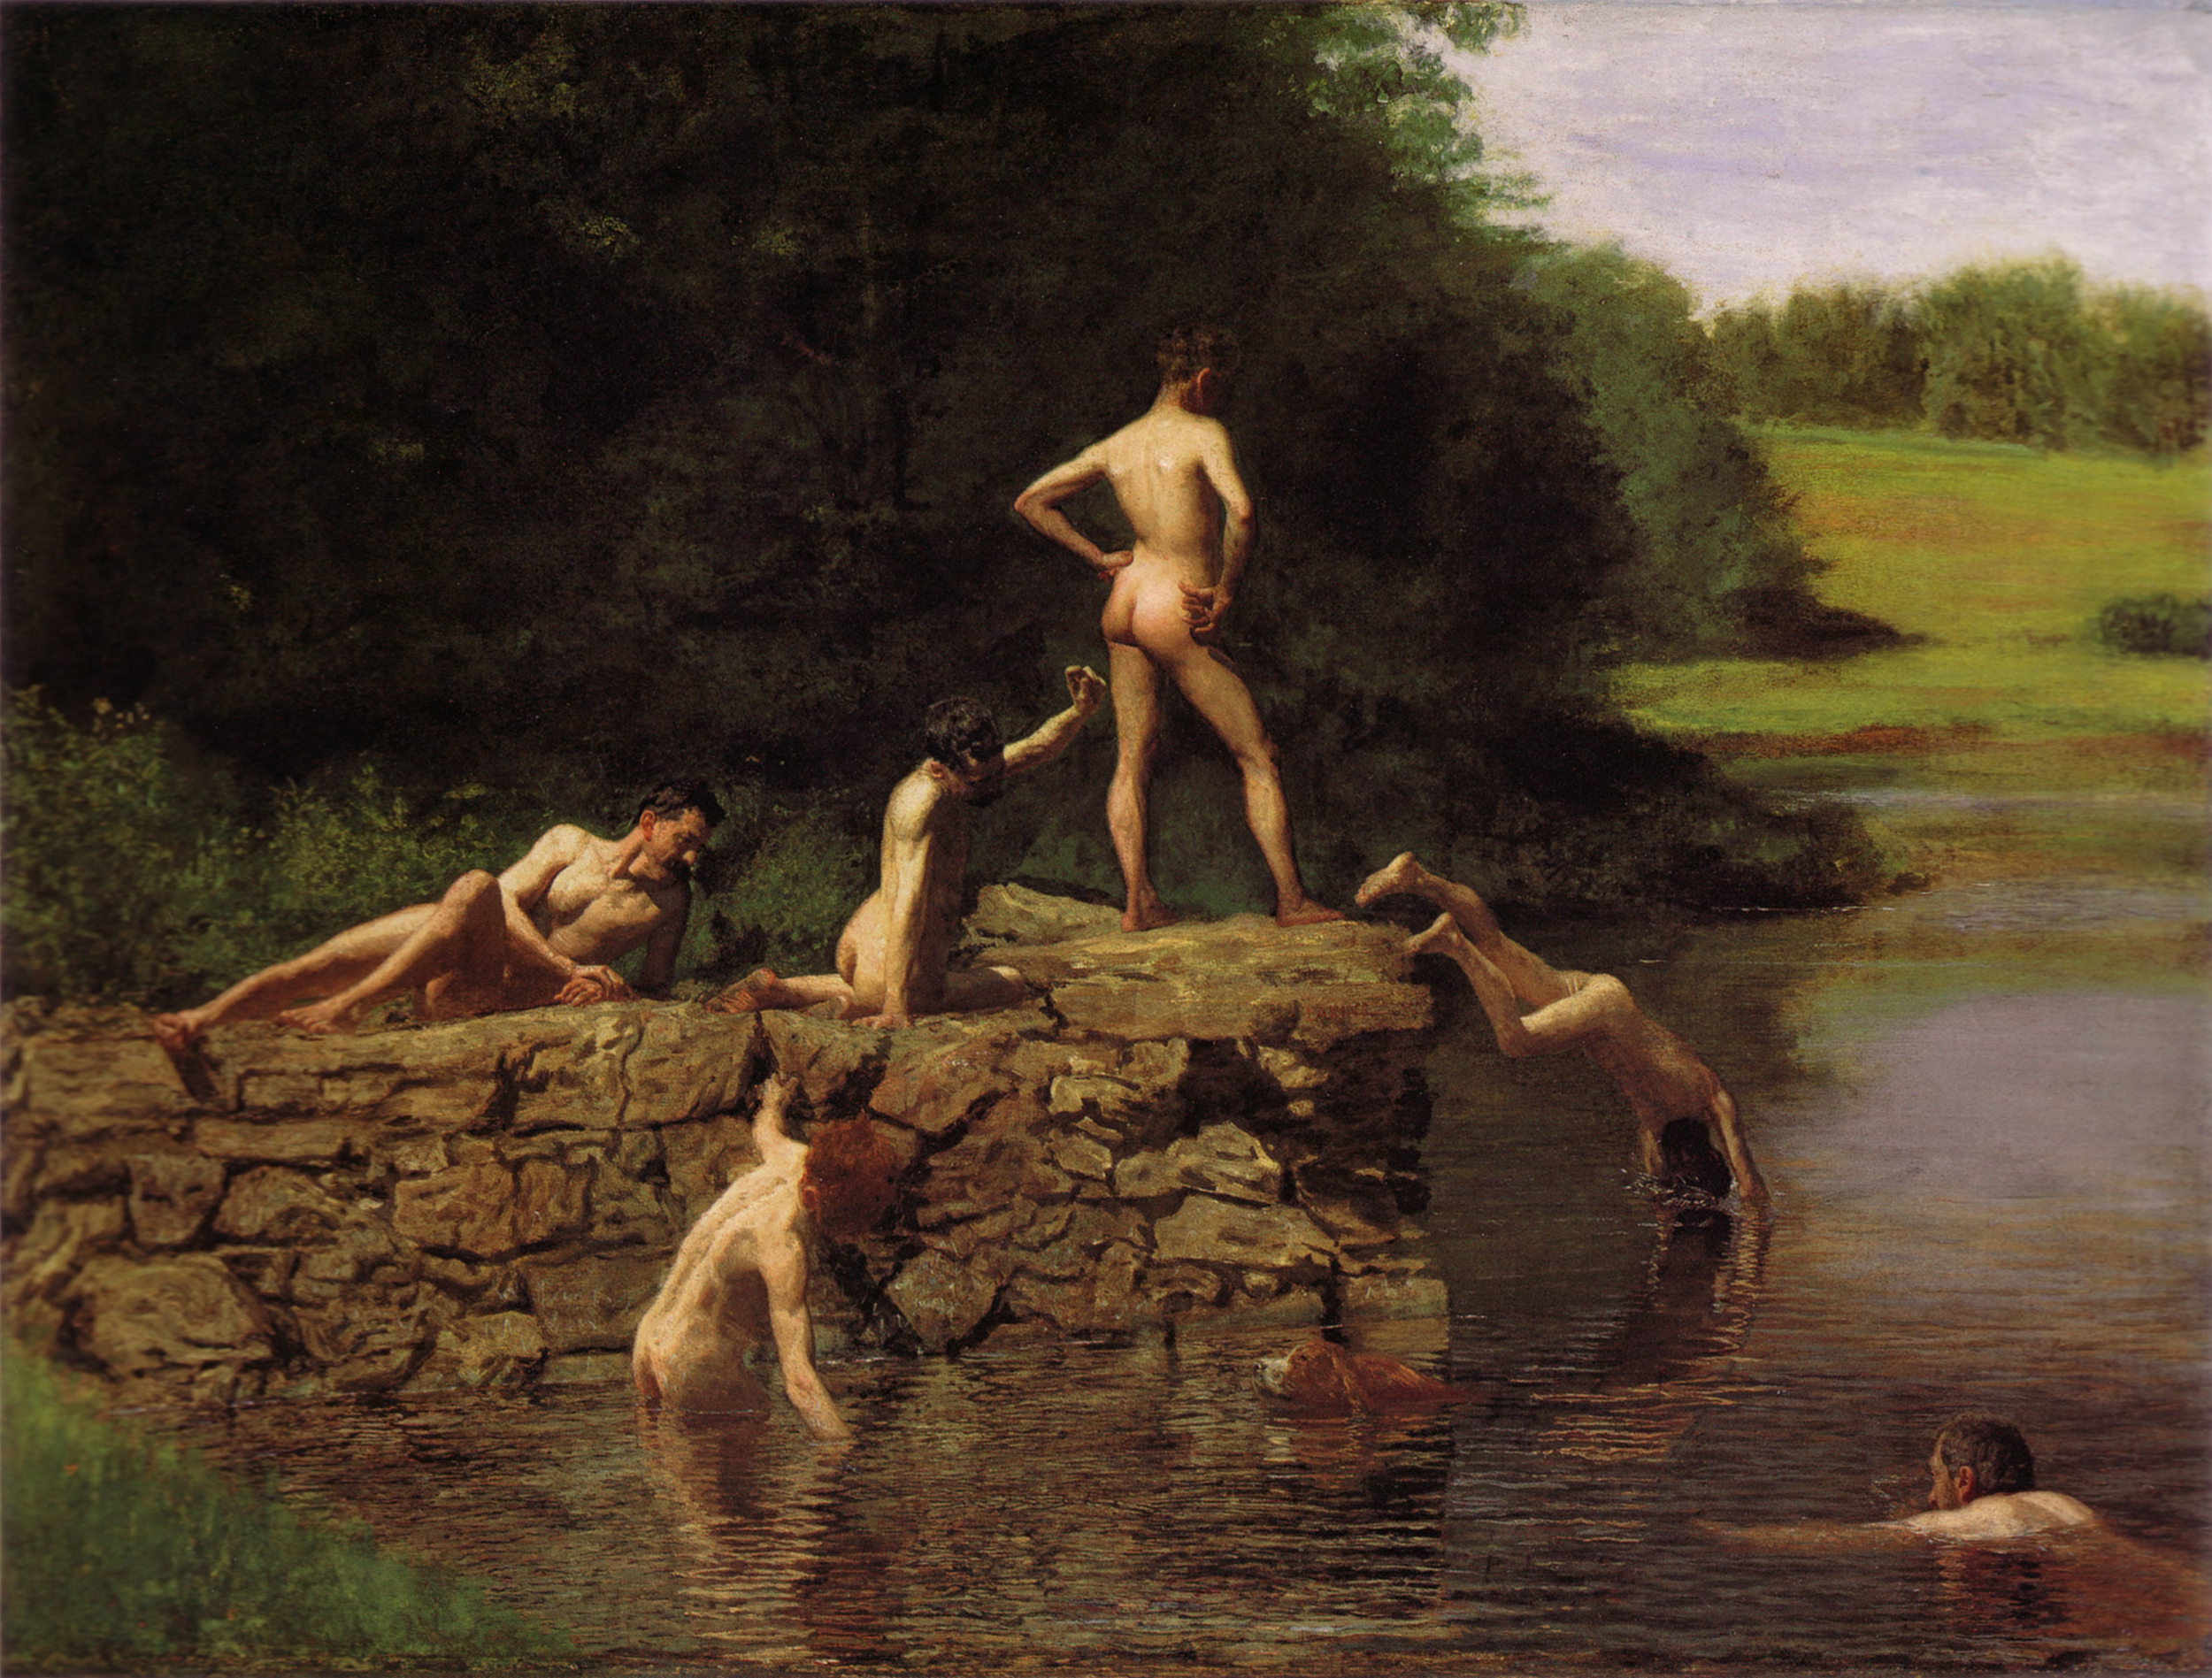 Nude boy in river